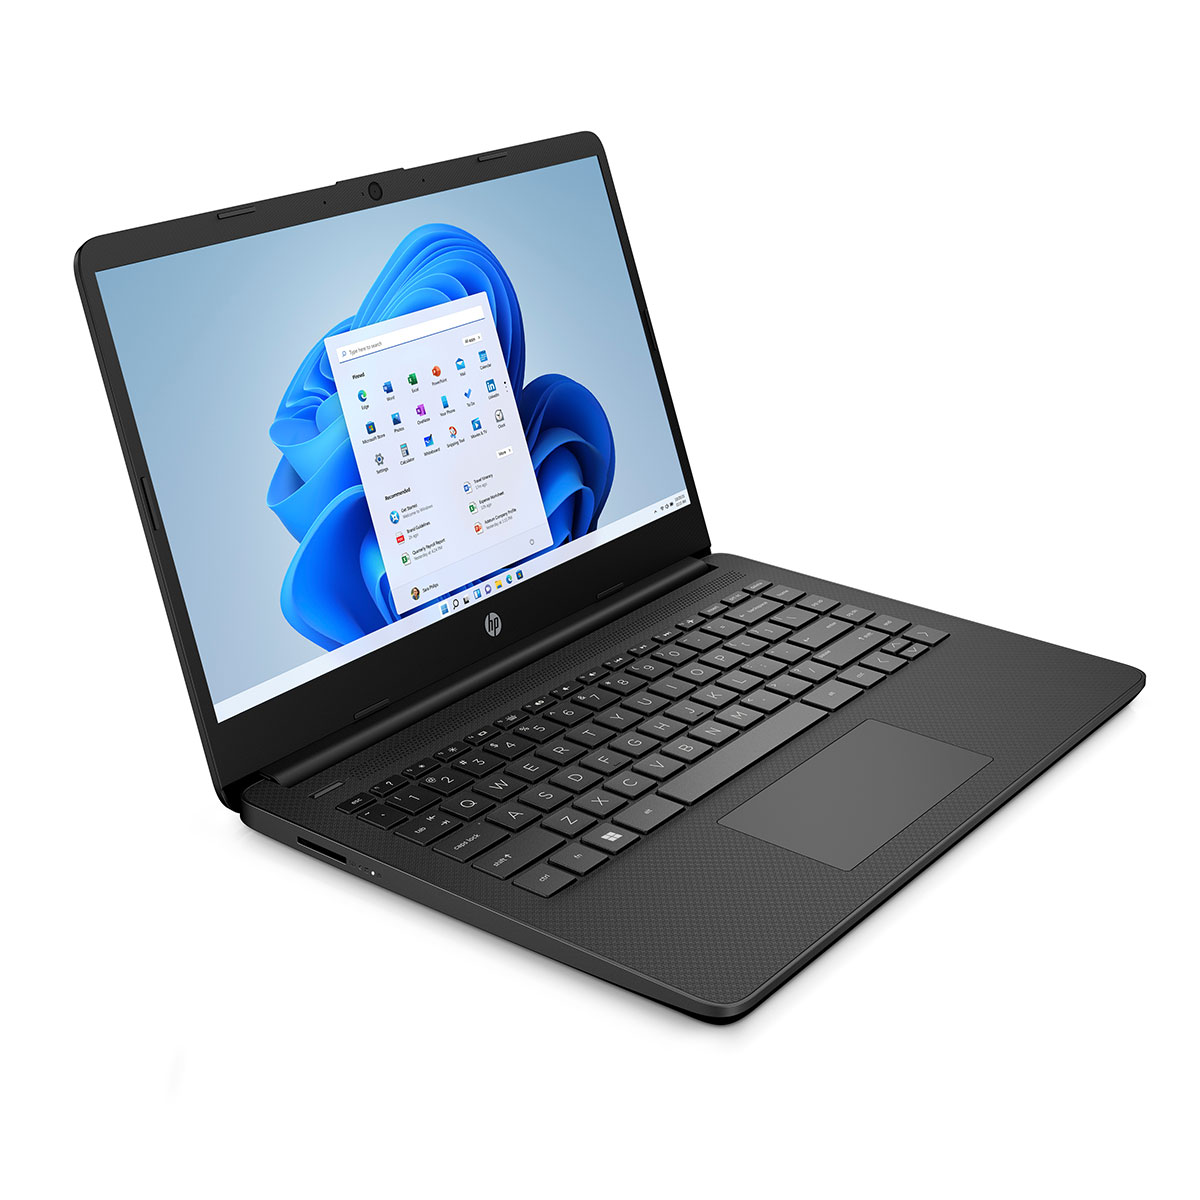 245 G4 Notebook PC